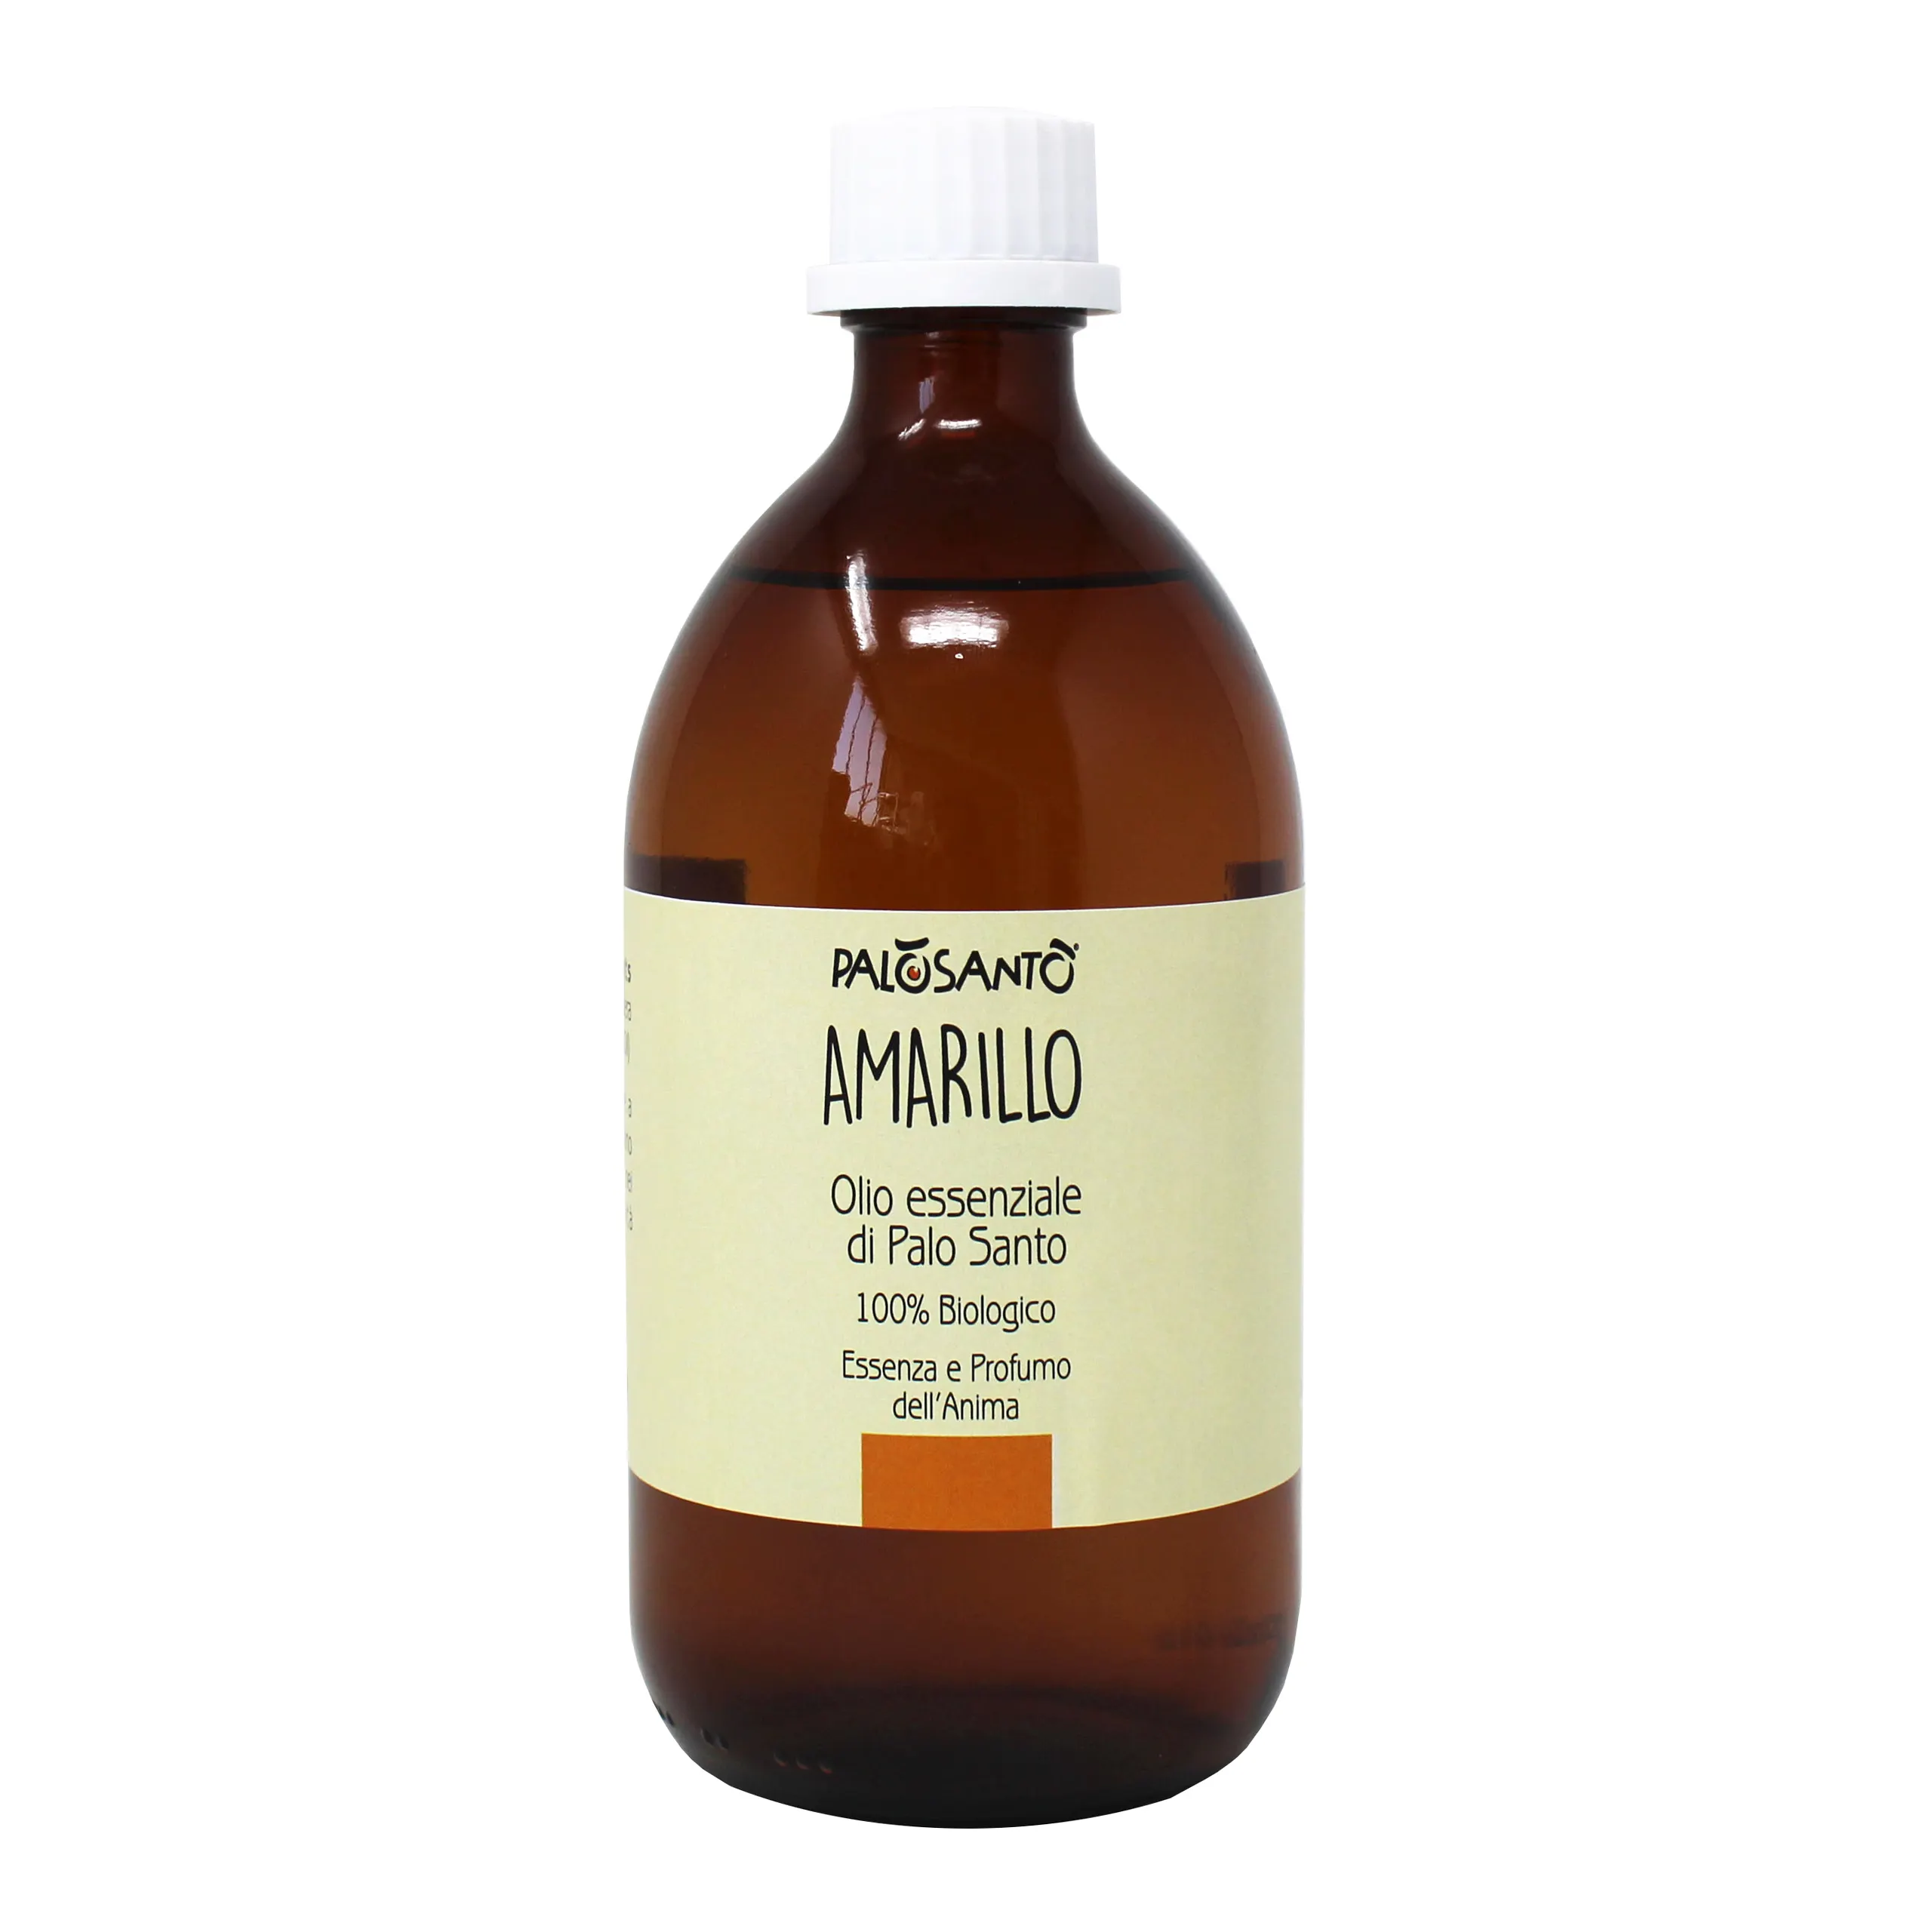 Palo Santo Öl ideal für Aromatherapie  Palo Santo Ätherisches Öl aus Ecuador  Versandt aus Ecuador  PALOSANTO  6 kg oder mehr